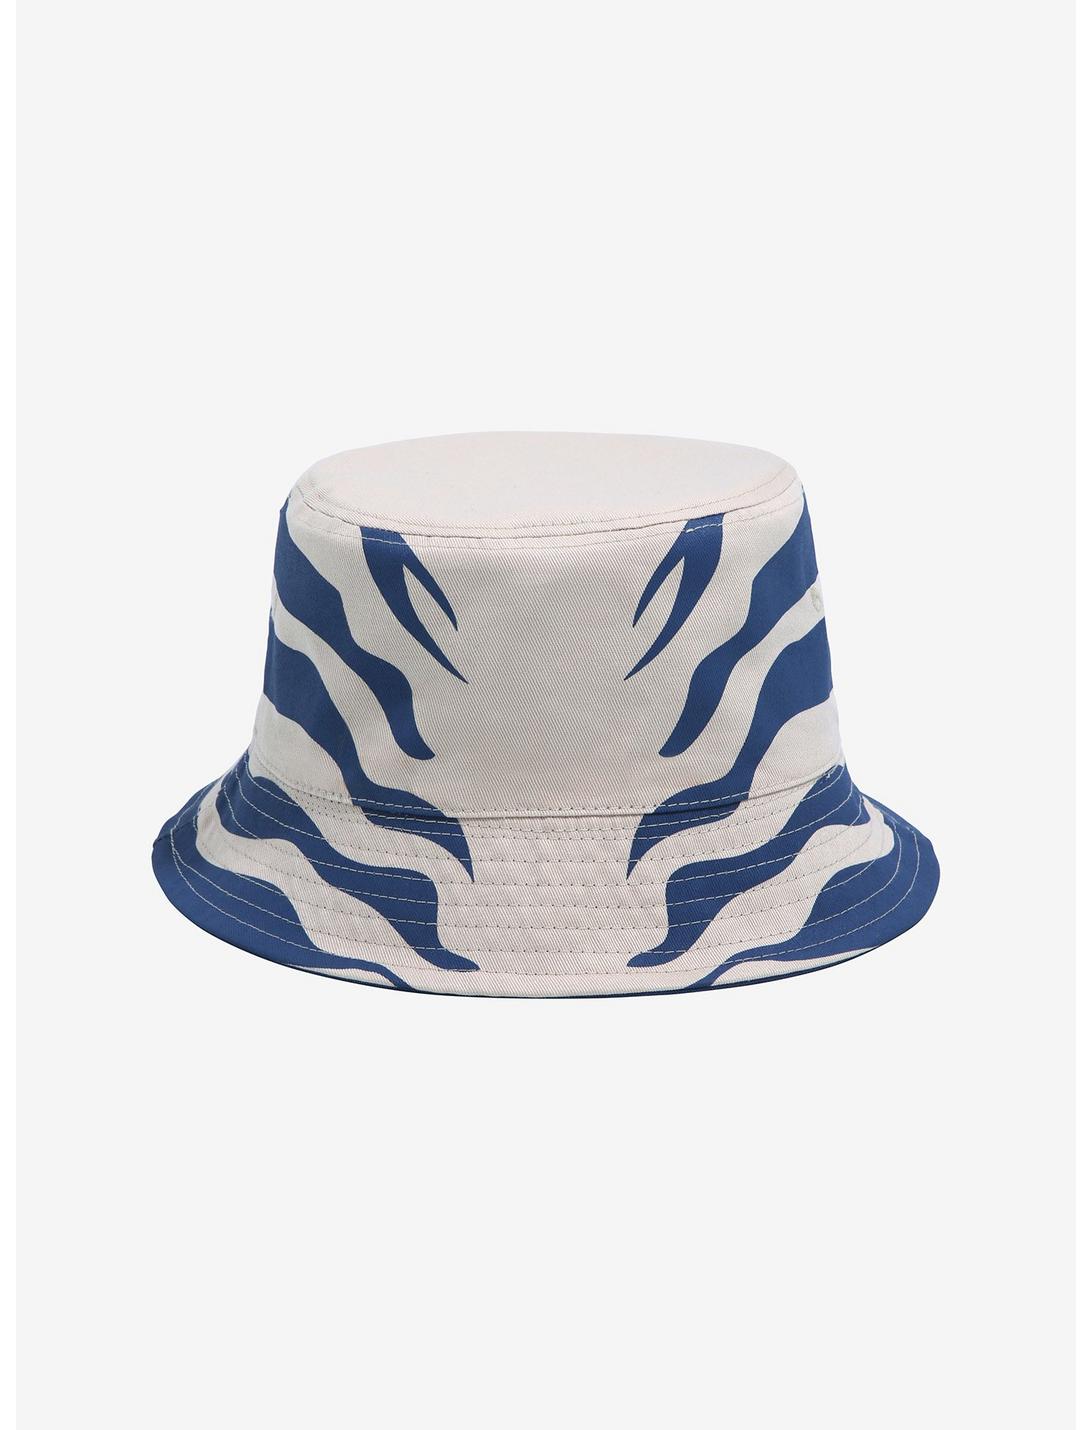 Star Wars Ahsoka Tano Reversible Bucket Hat, , hi-res